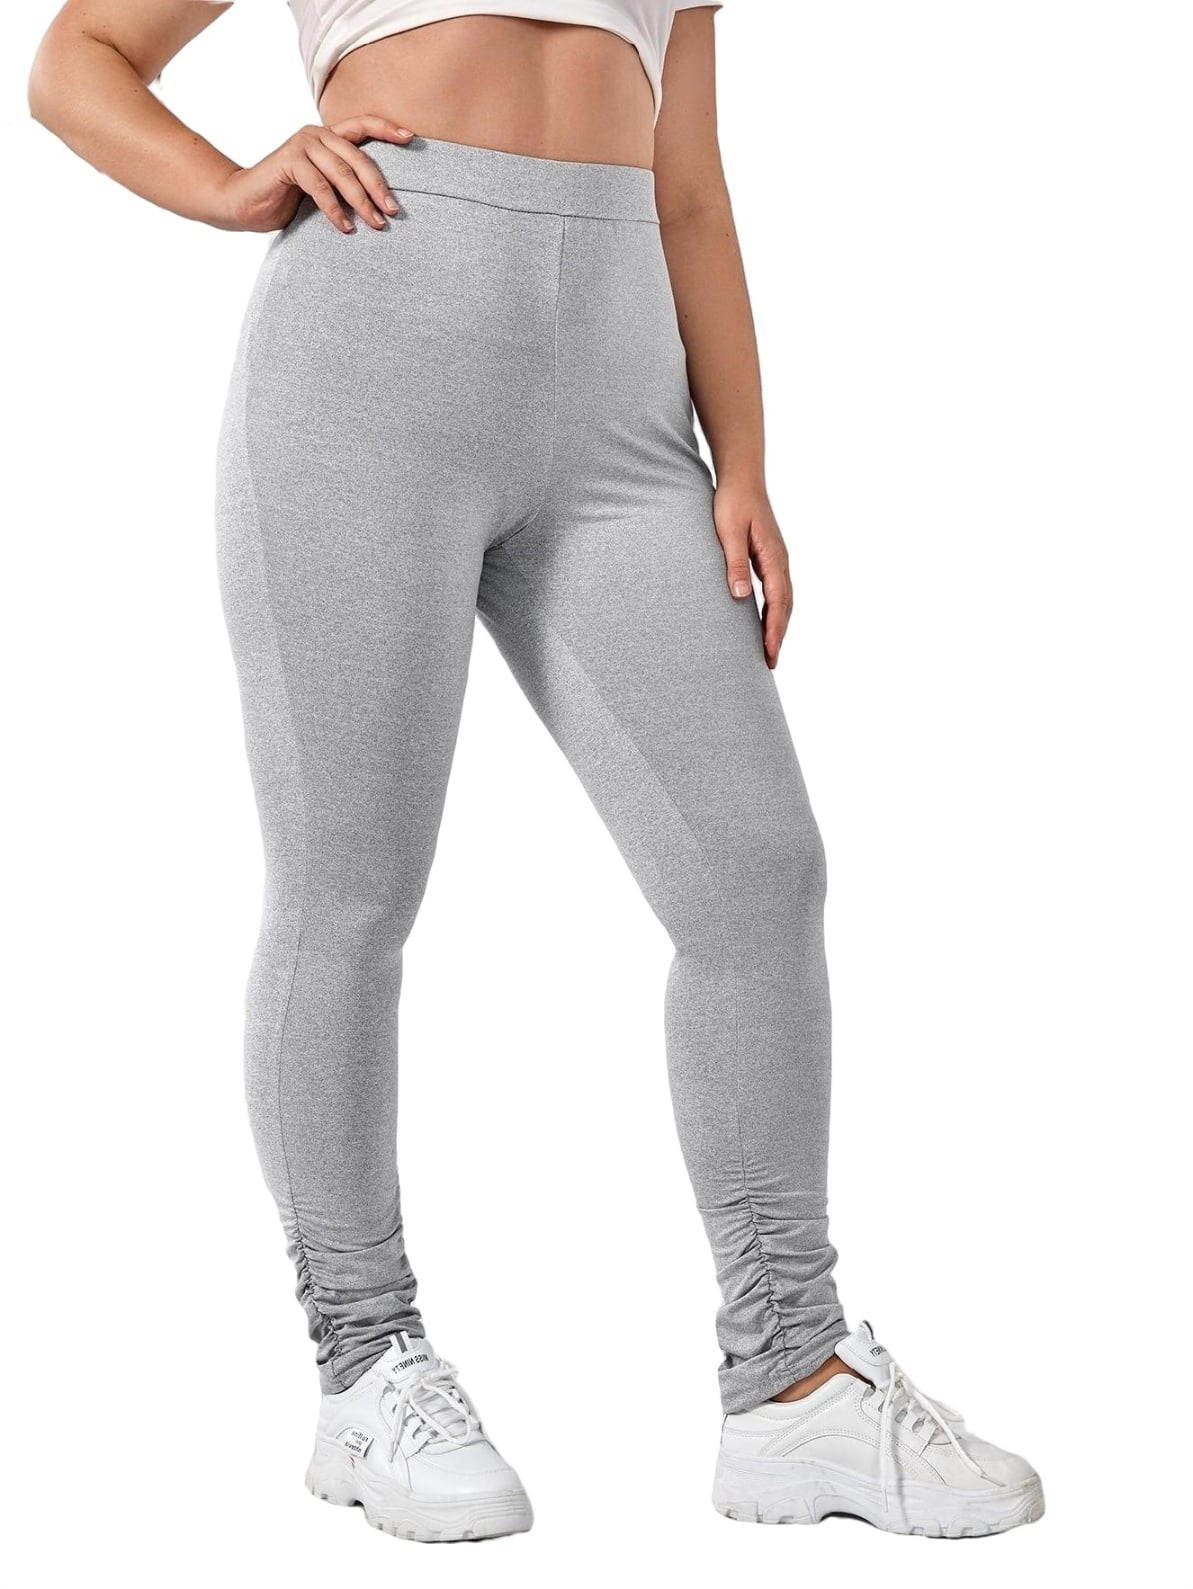 Women's Plus Size Stacked Leggings Casual Yoga Sport Pants Slim Hem Pants  Workout Active Sweatpants 2XL(16) 